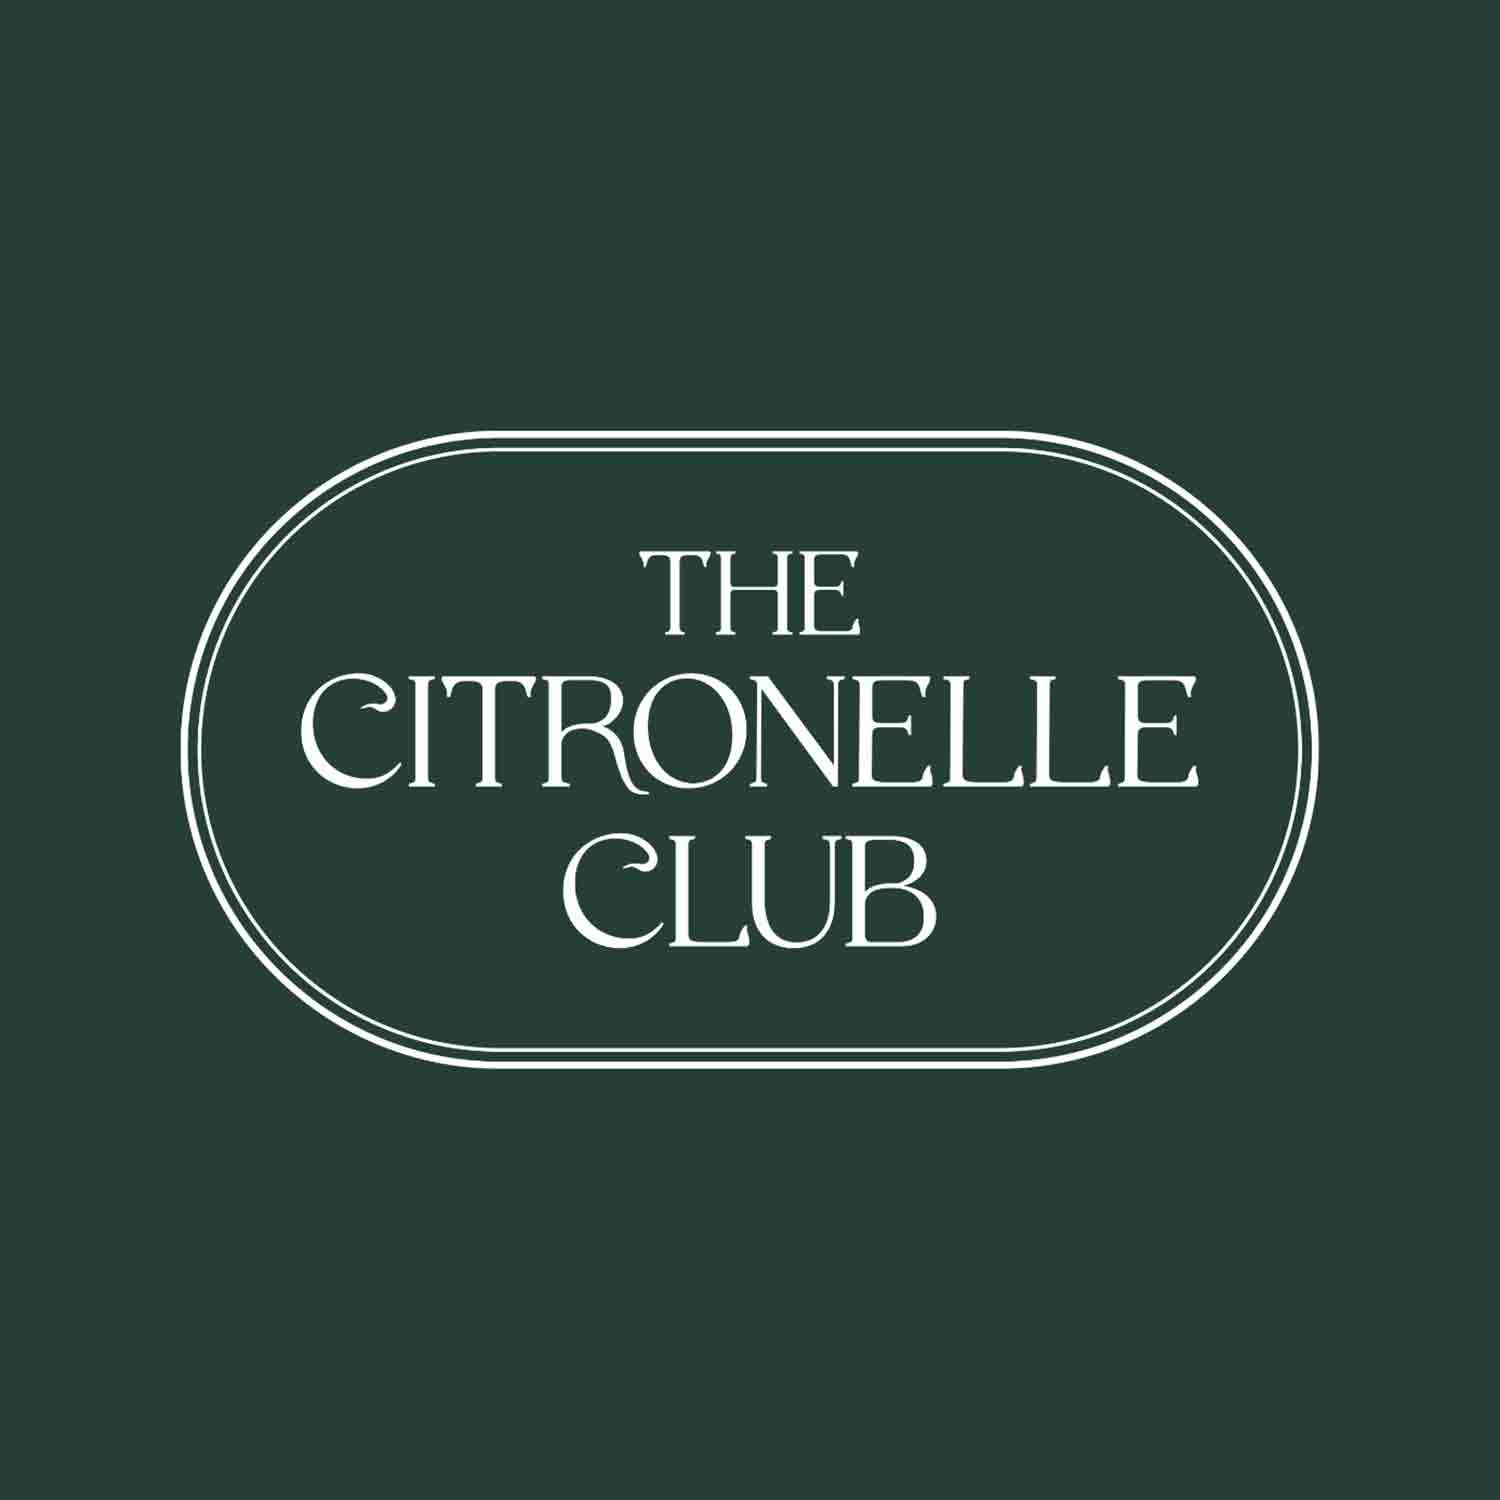 The Citronelle Club